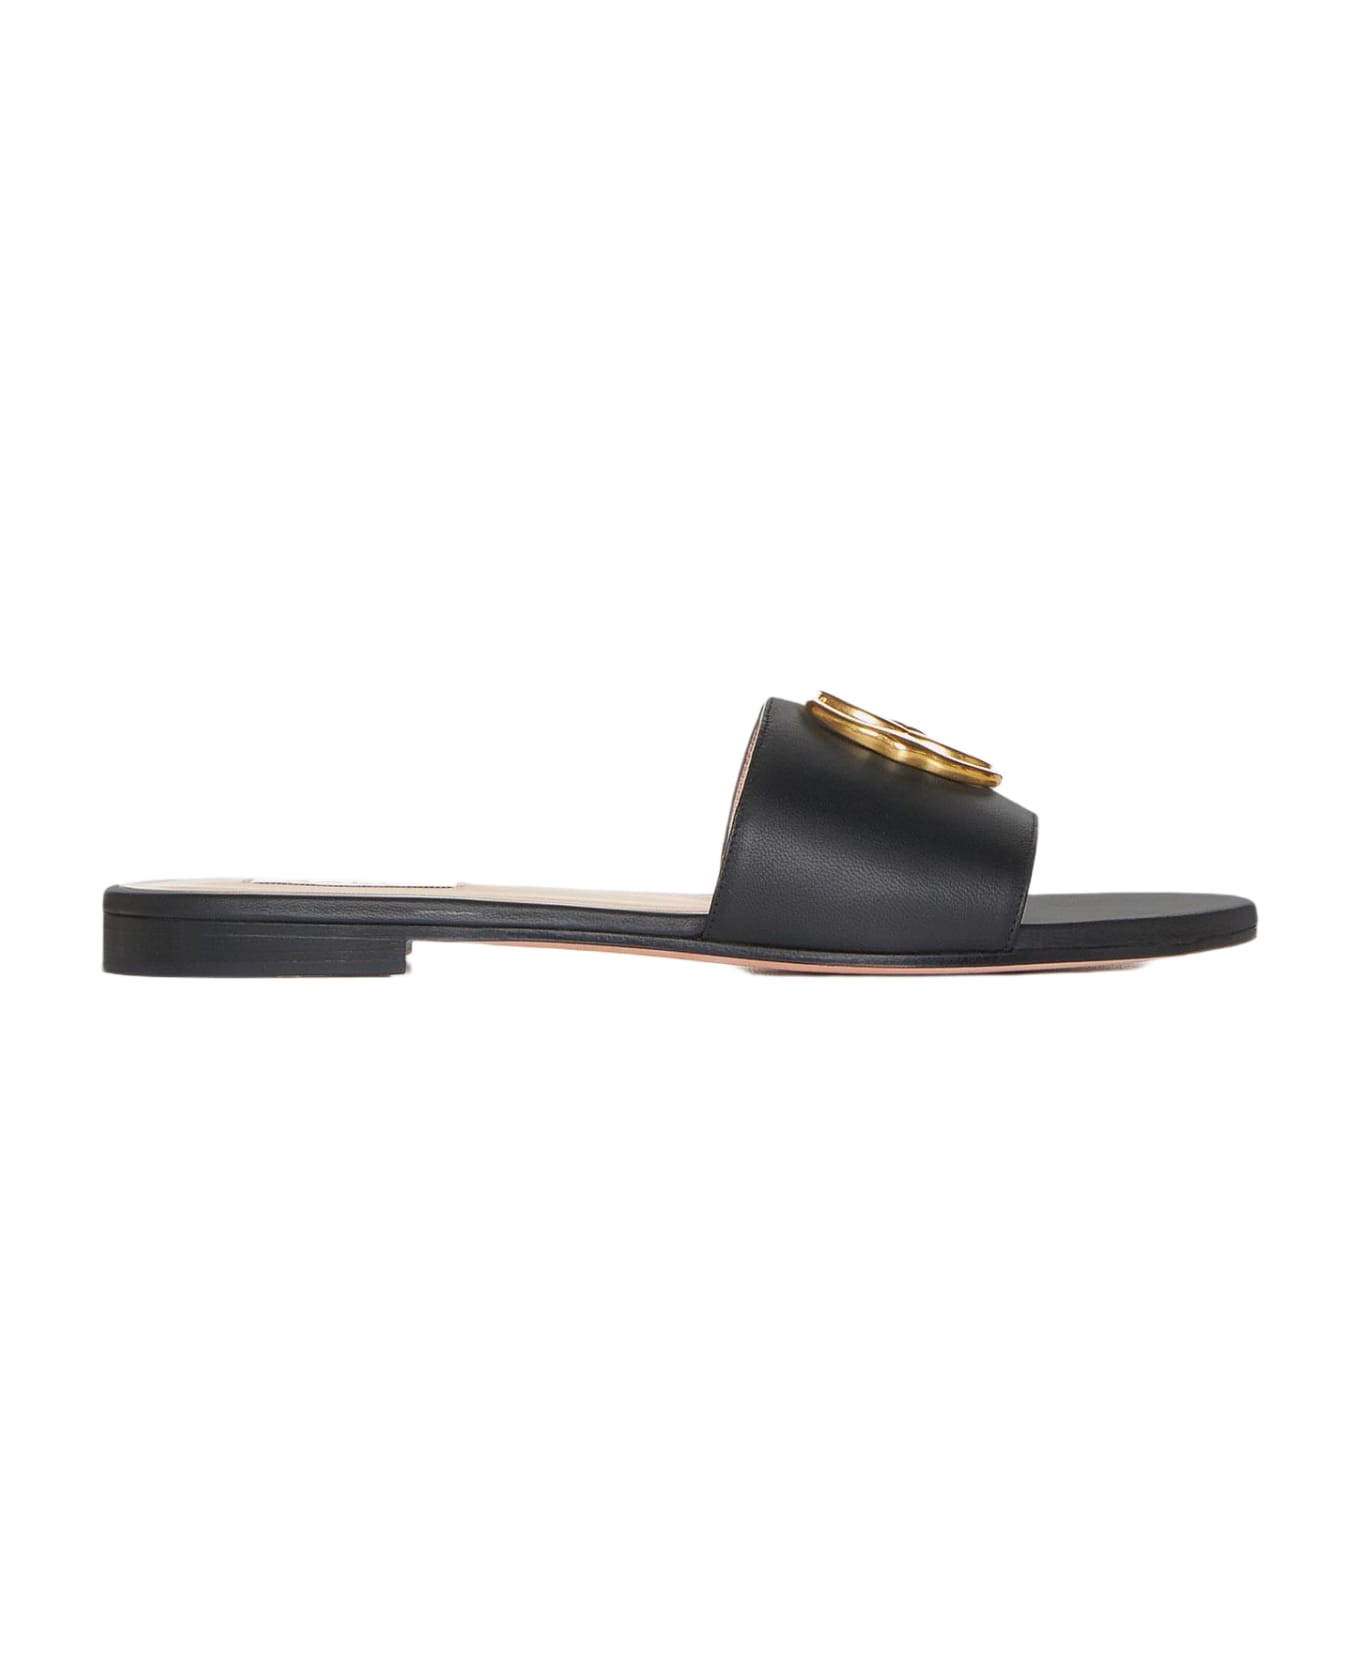 Bally Ghis Leather Flat Sandals - Black サンダル